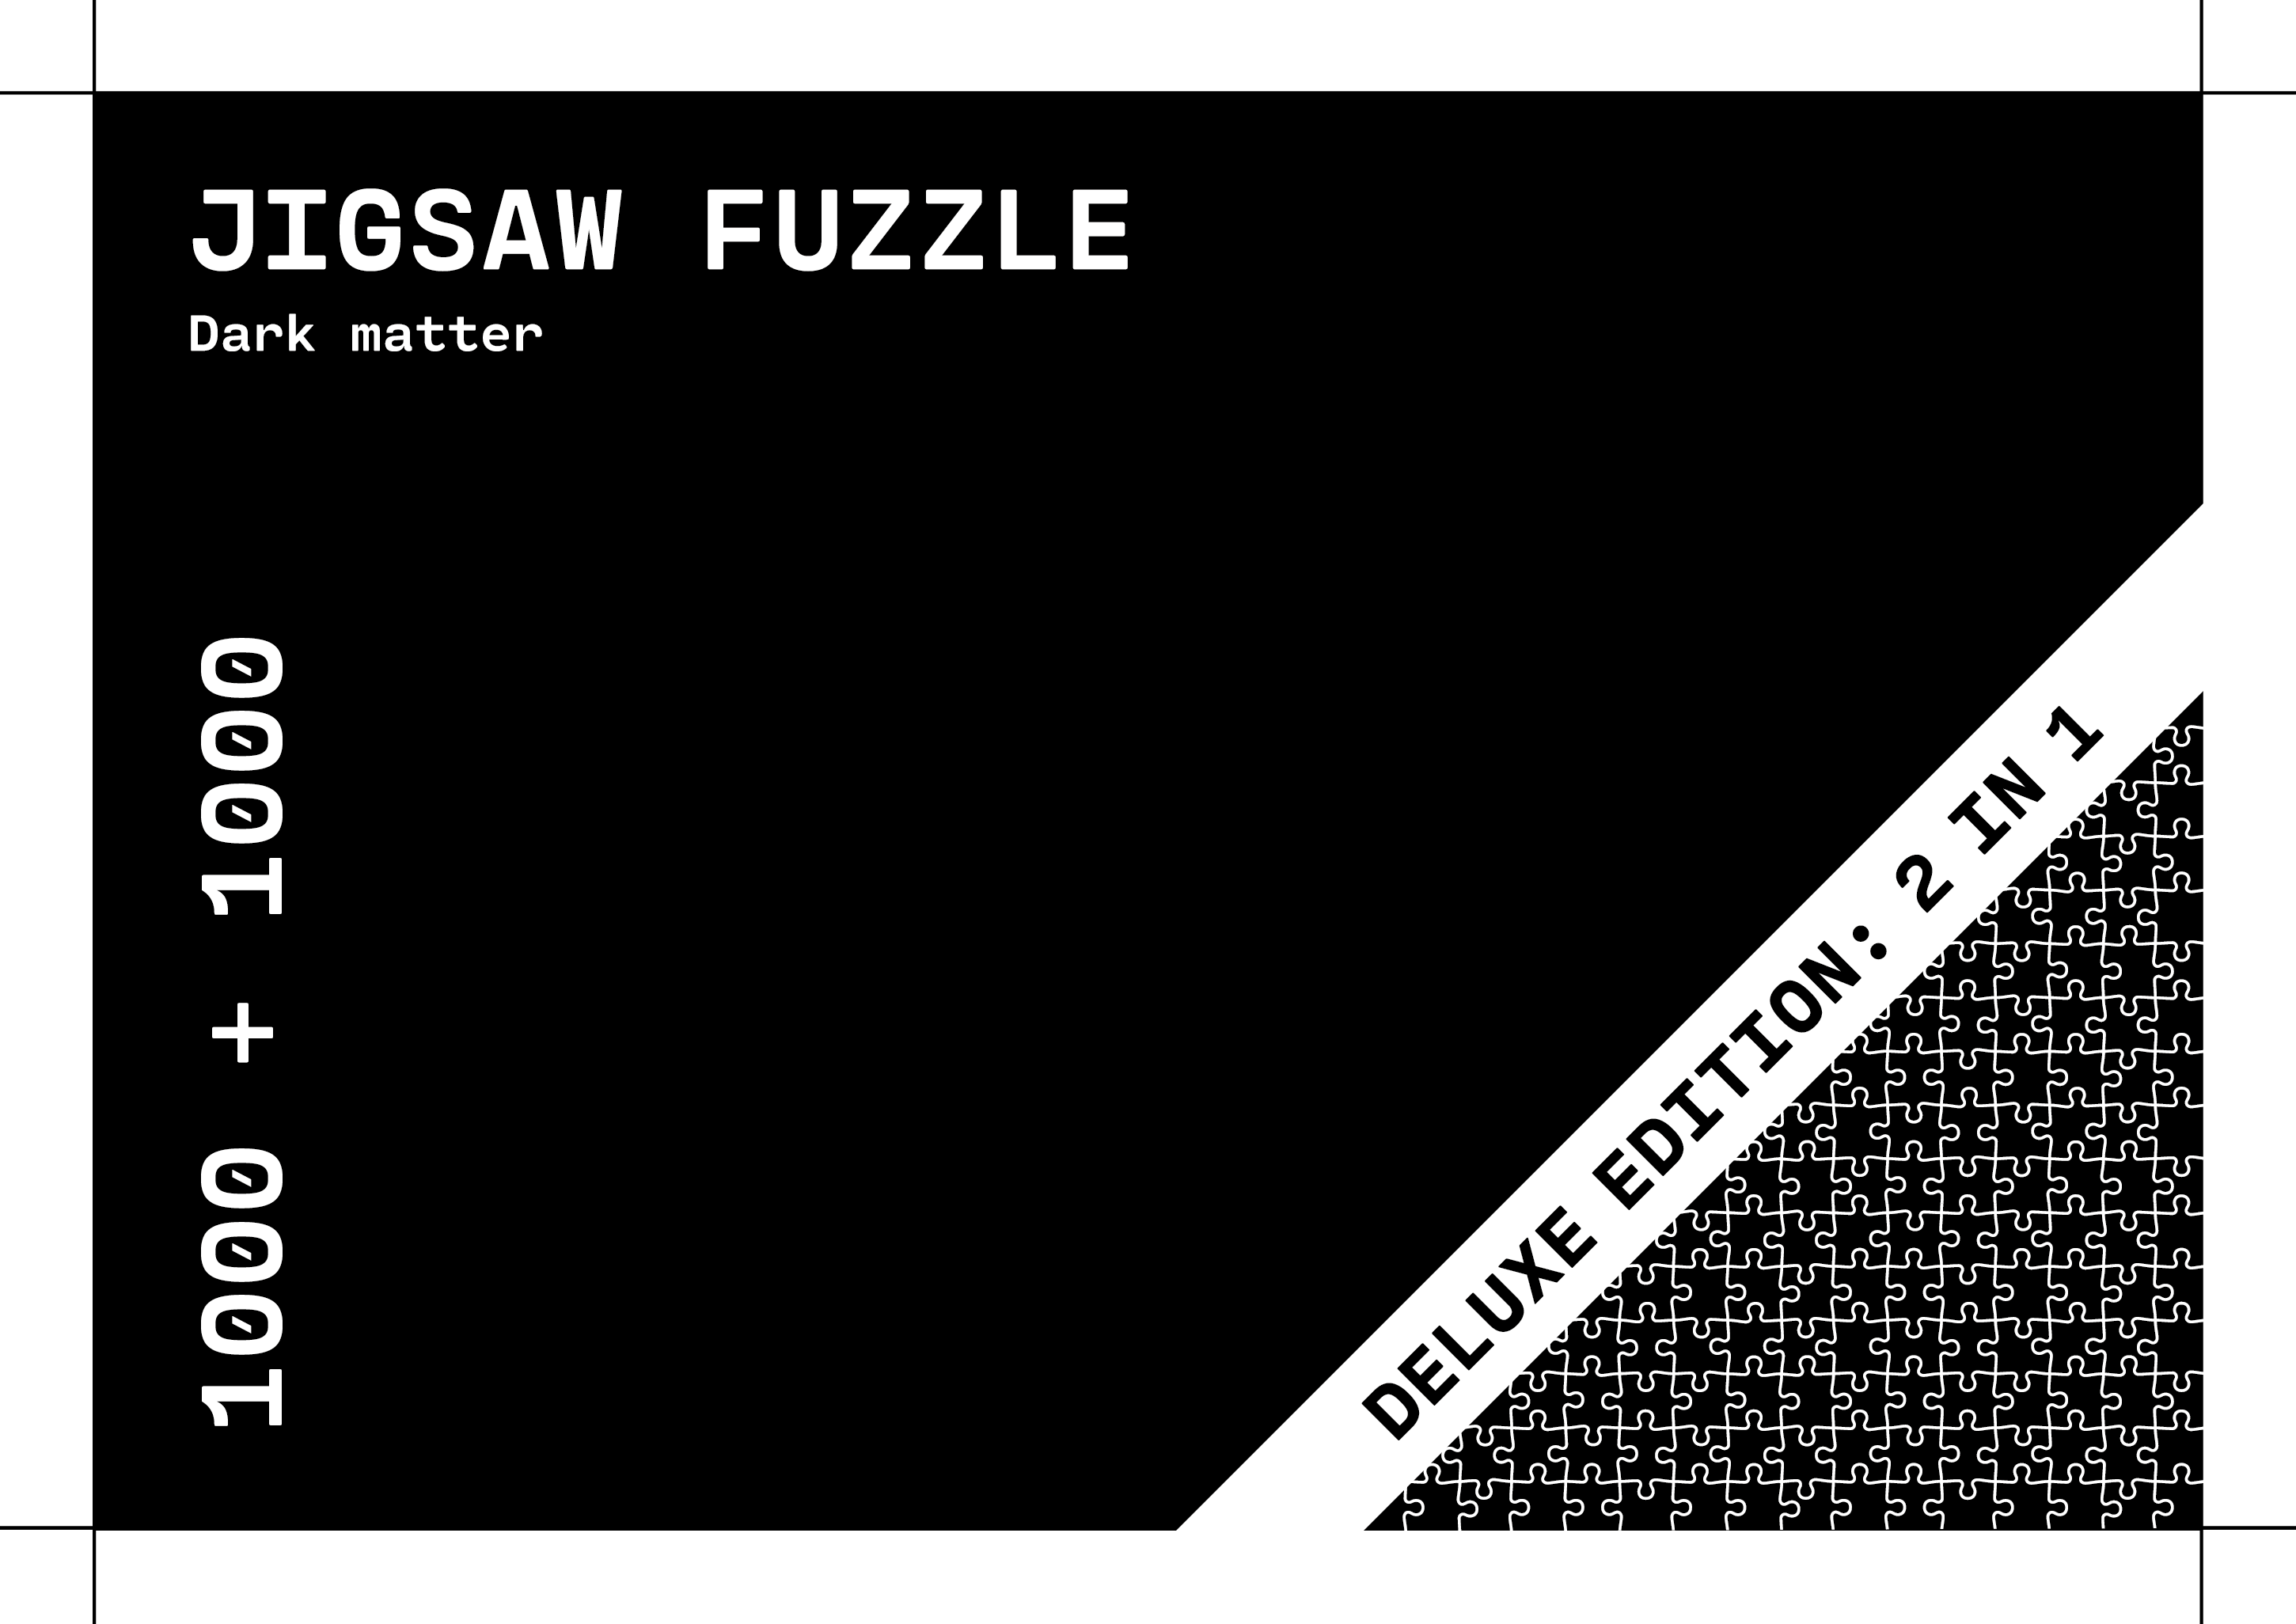 Jigsaw Fuzzles